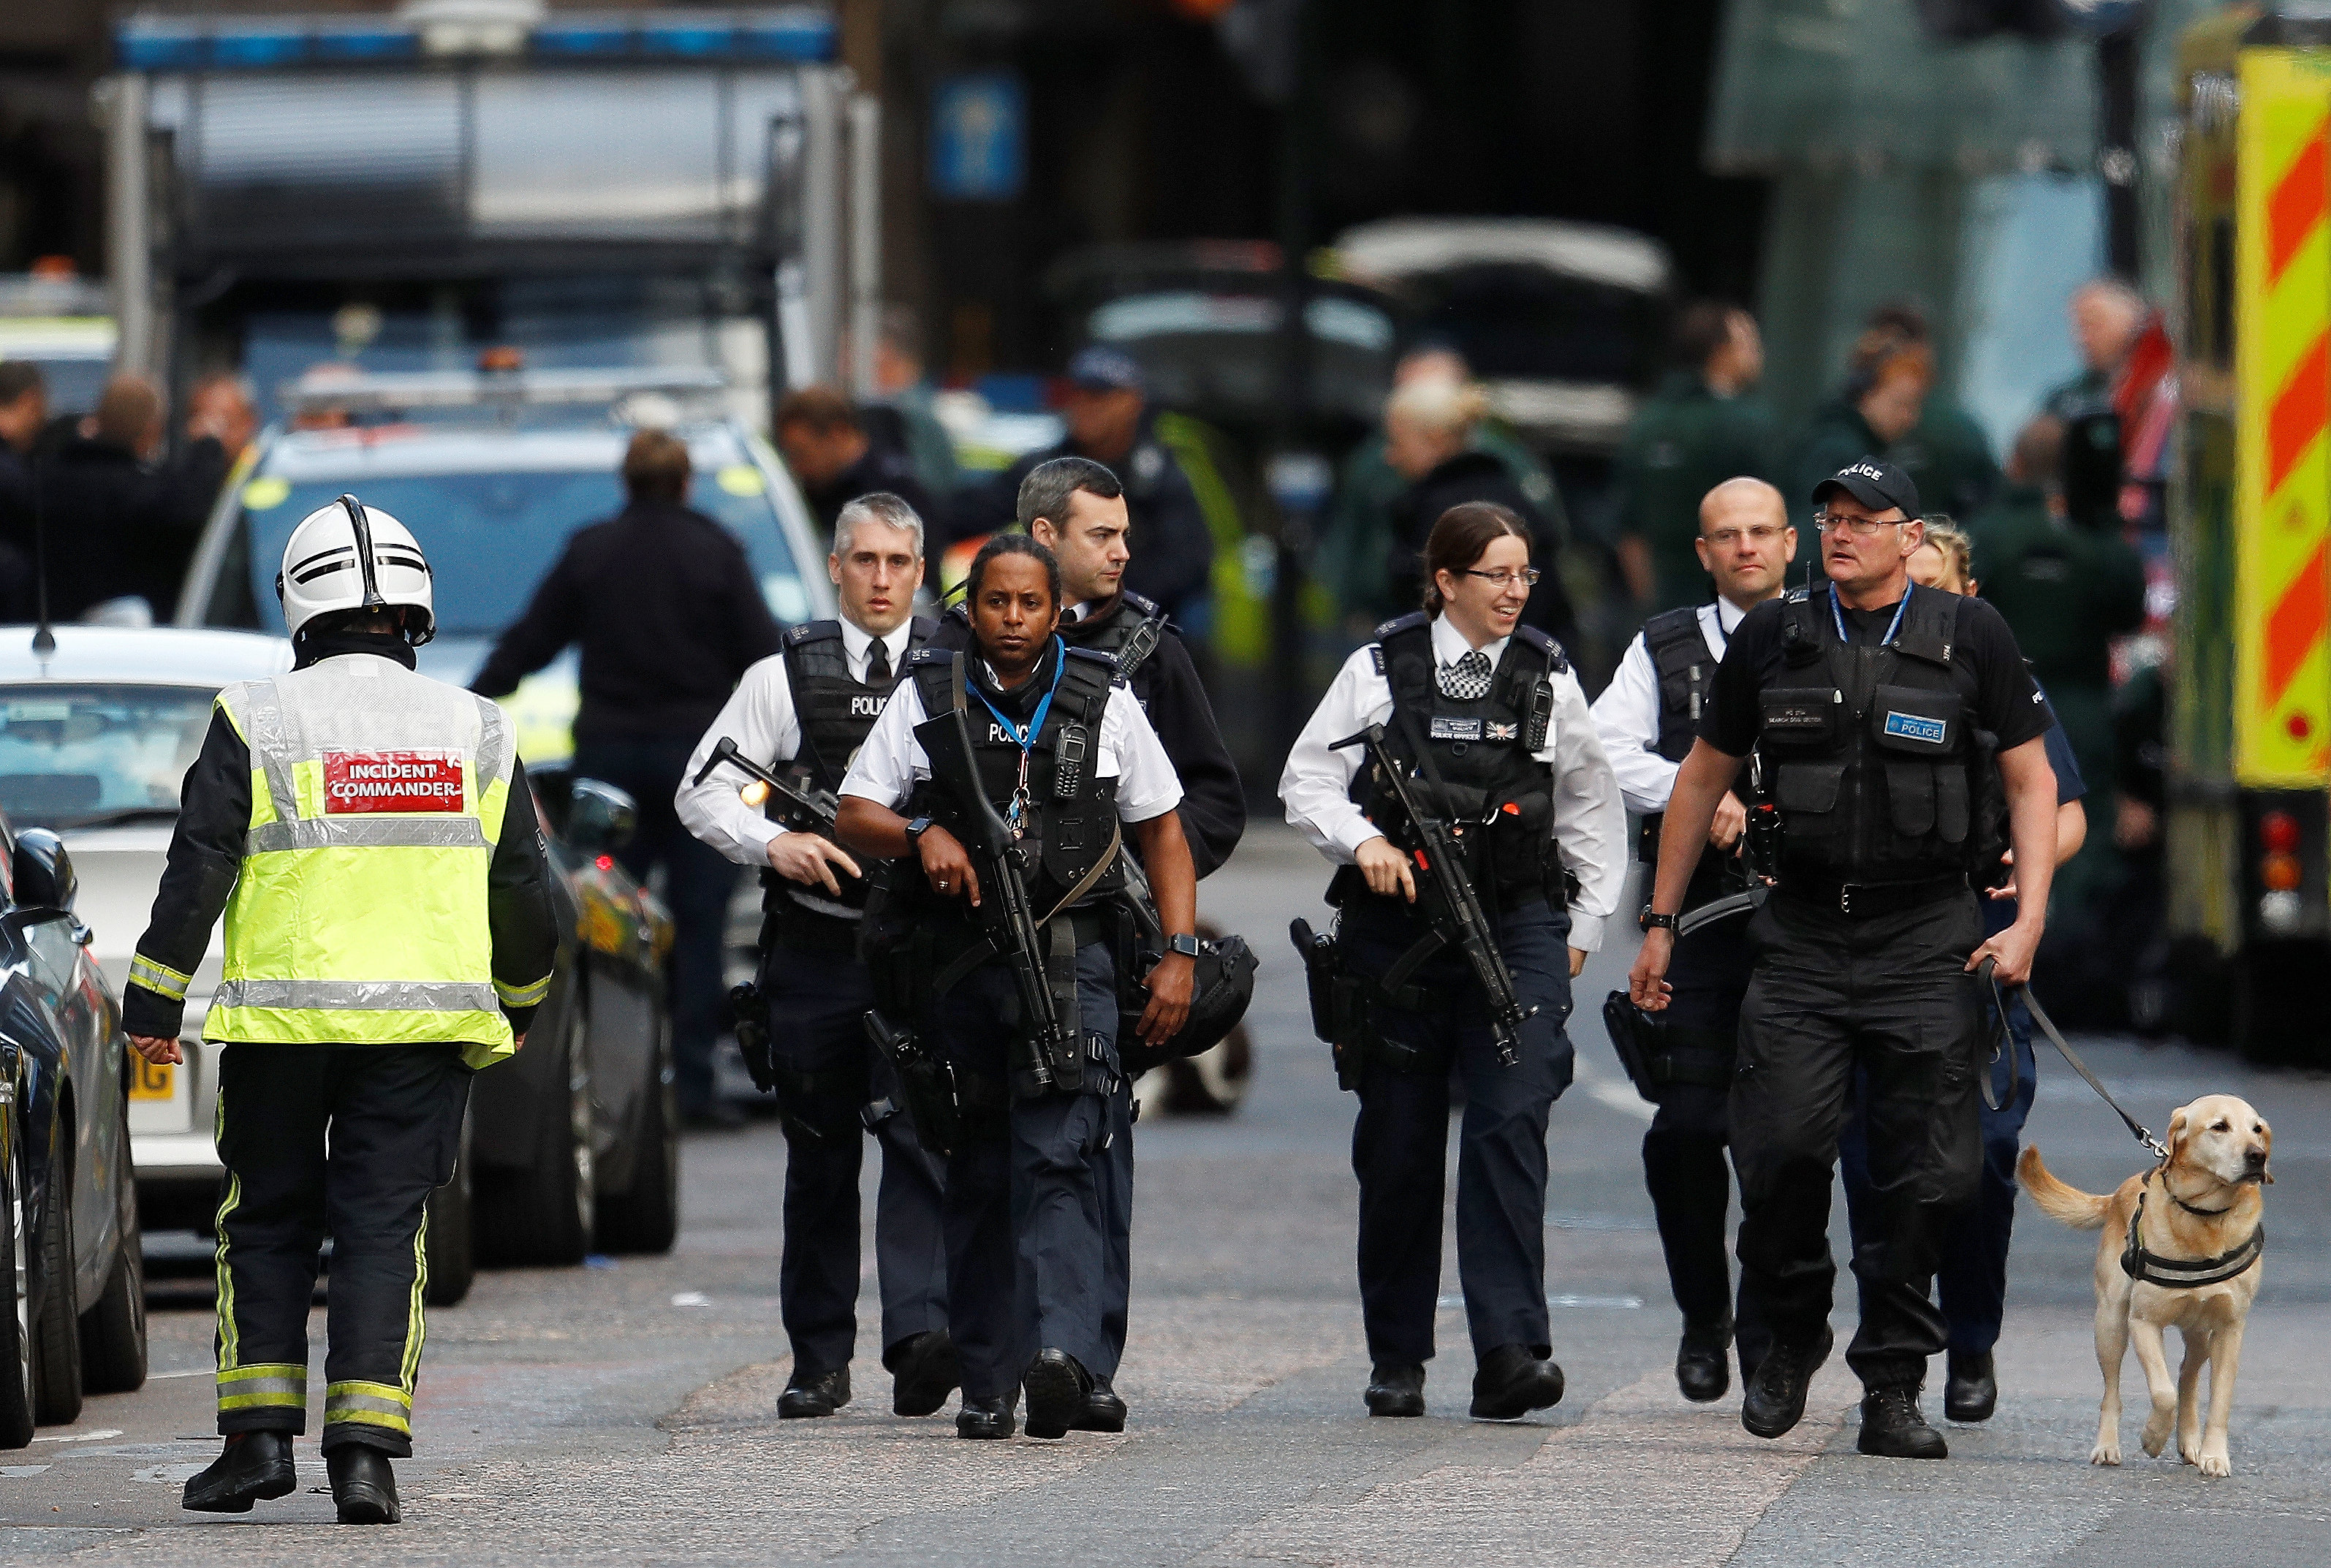 British prime minister Theresa May says 'enough is enough' after London attackers kill seven